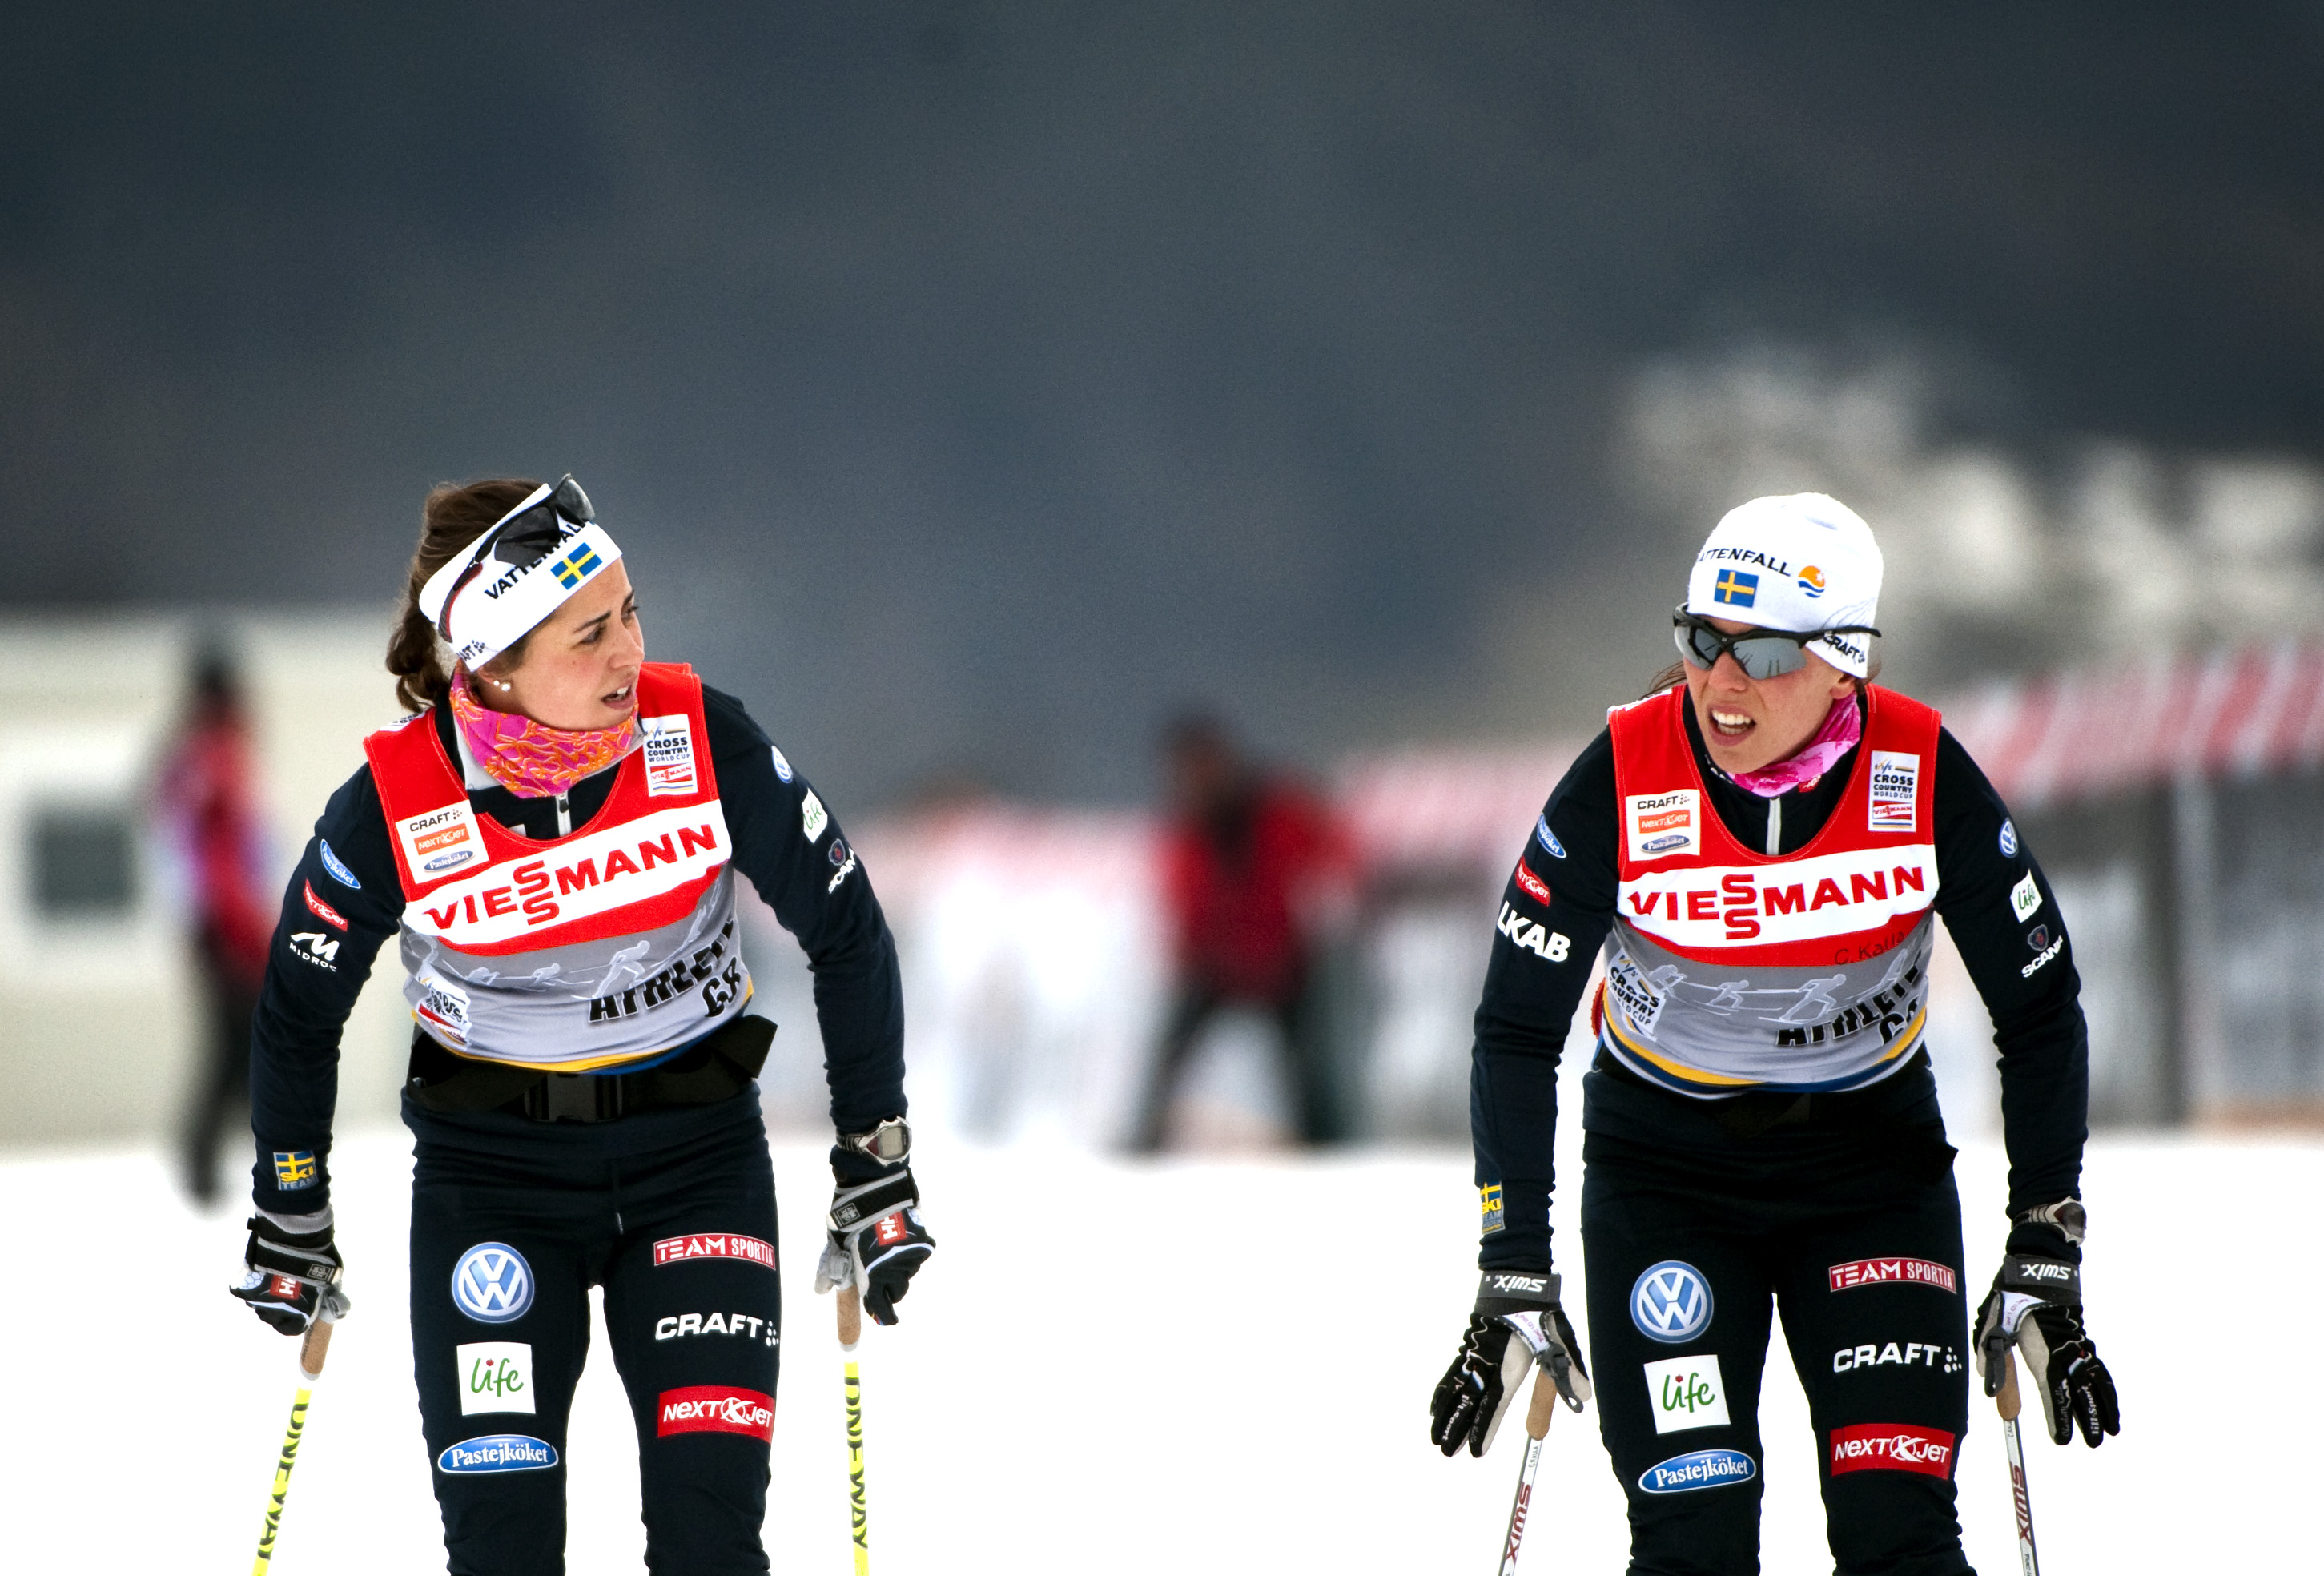 Anna Haag, Tour de Ski, skidor, Charlotte Kalla, Langdskidakning